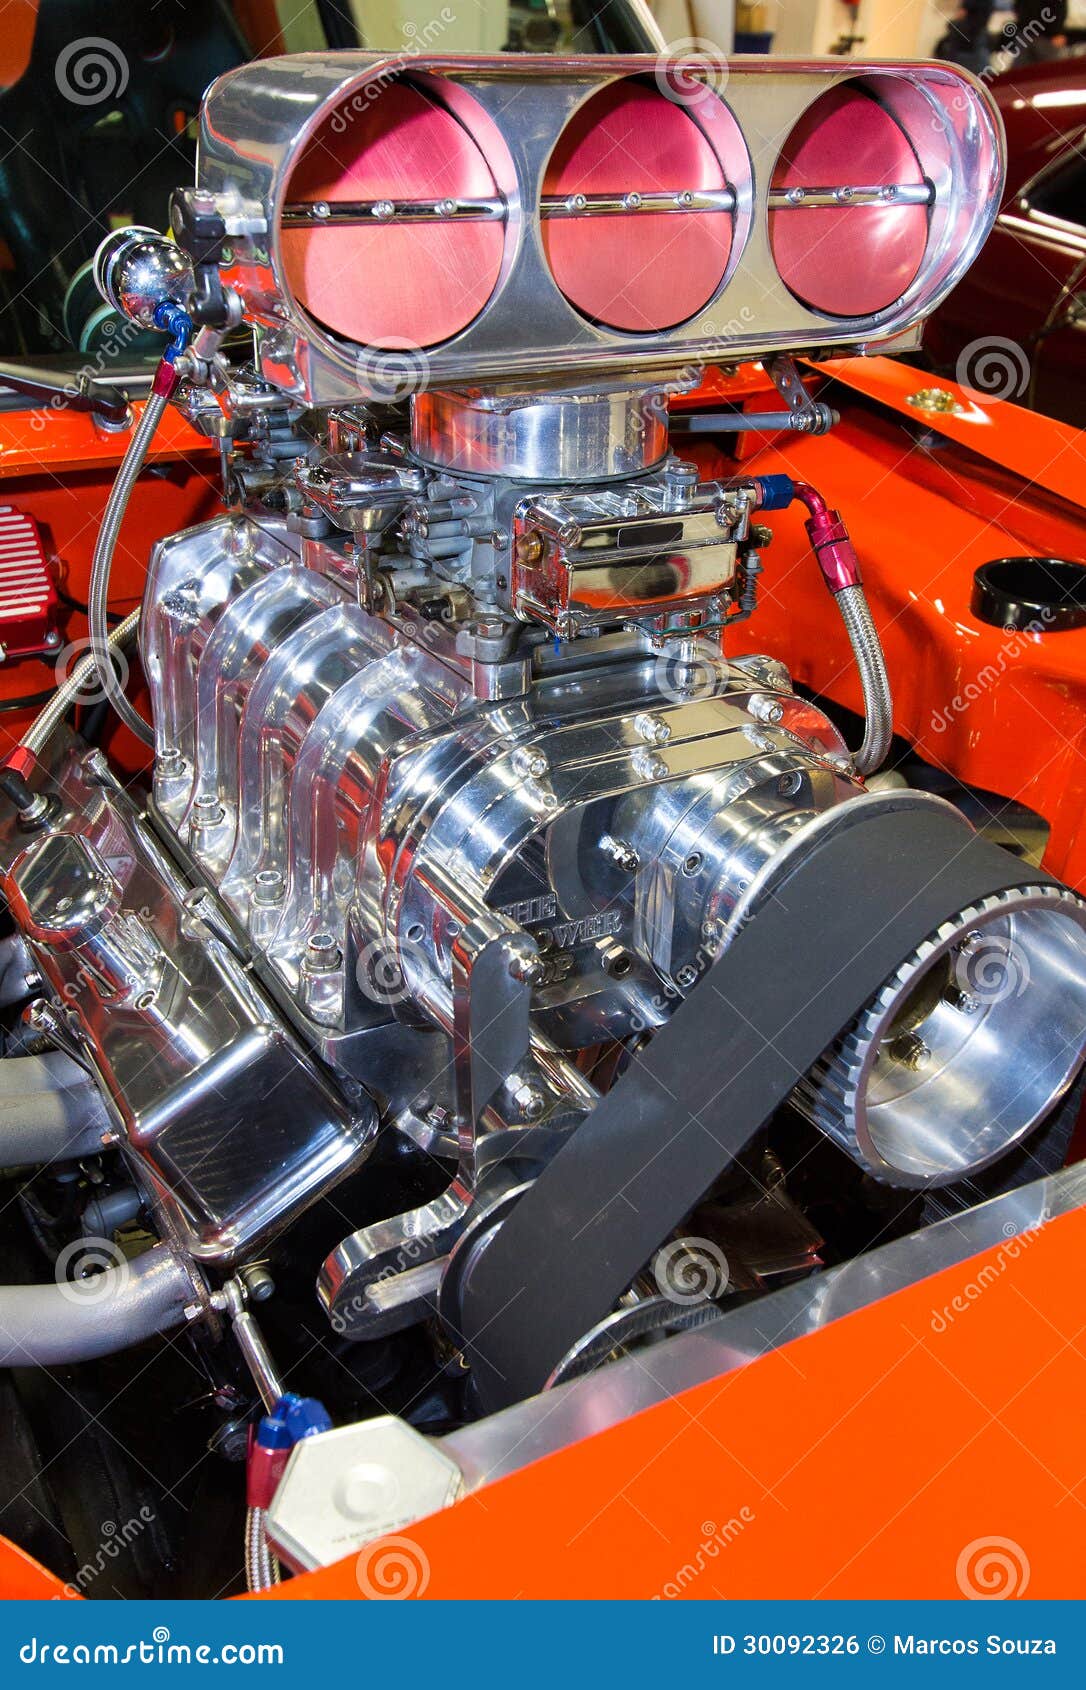 Muscle Car Engine stock photo. Image of machine, motor - 30092326